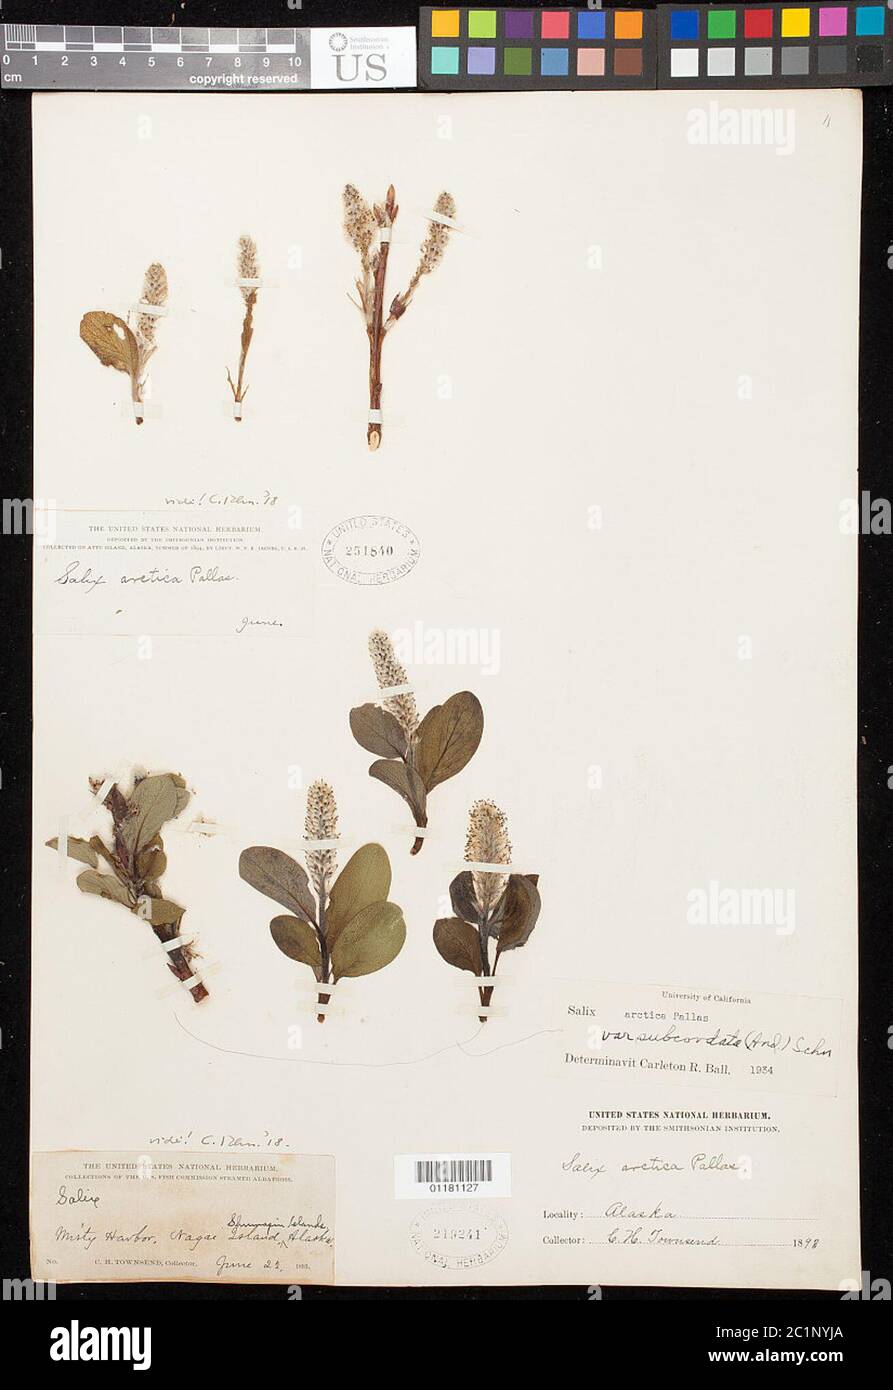 Salix arctica var subcordata CK Schneid Salix arctica var subcordata CK Schneid. Stock Photo